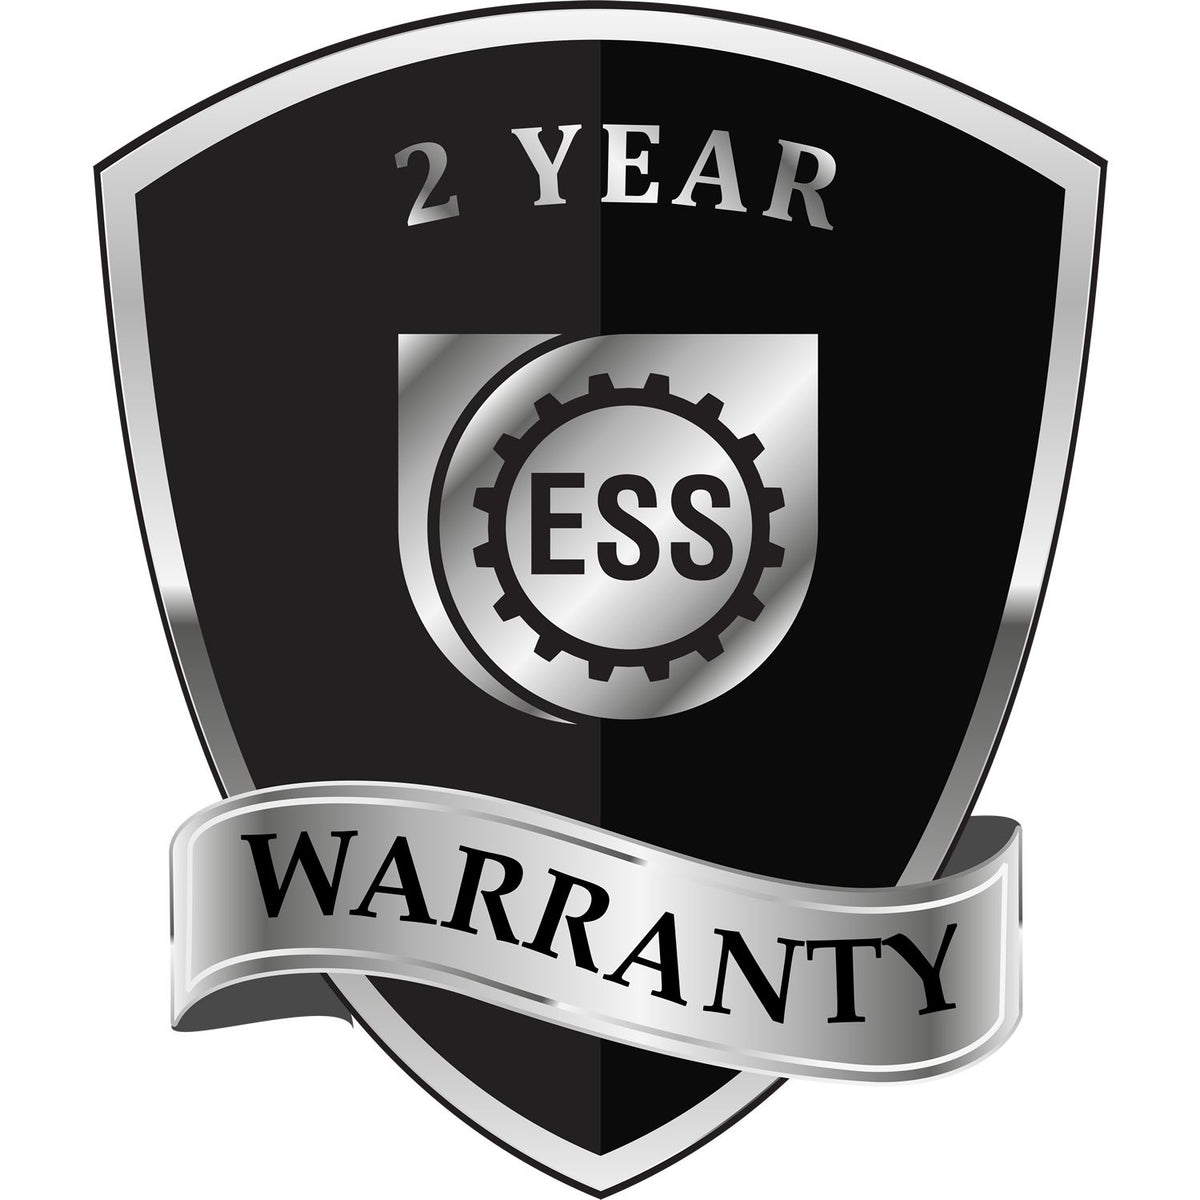 A black and silver badge or emblem showing warranty information for the Hybrid Mississippi Engineer Seal